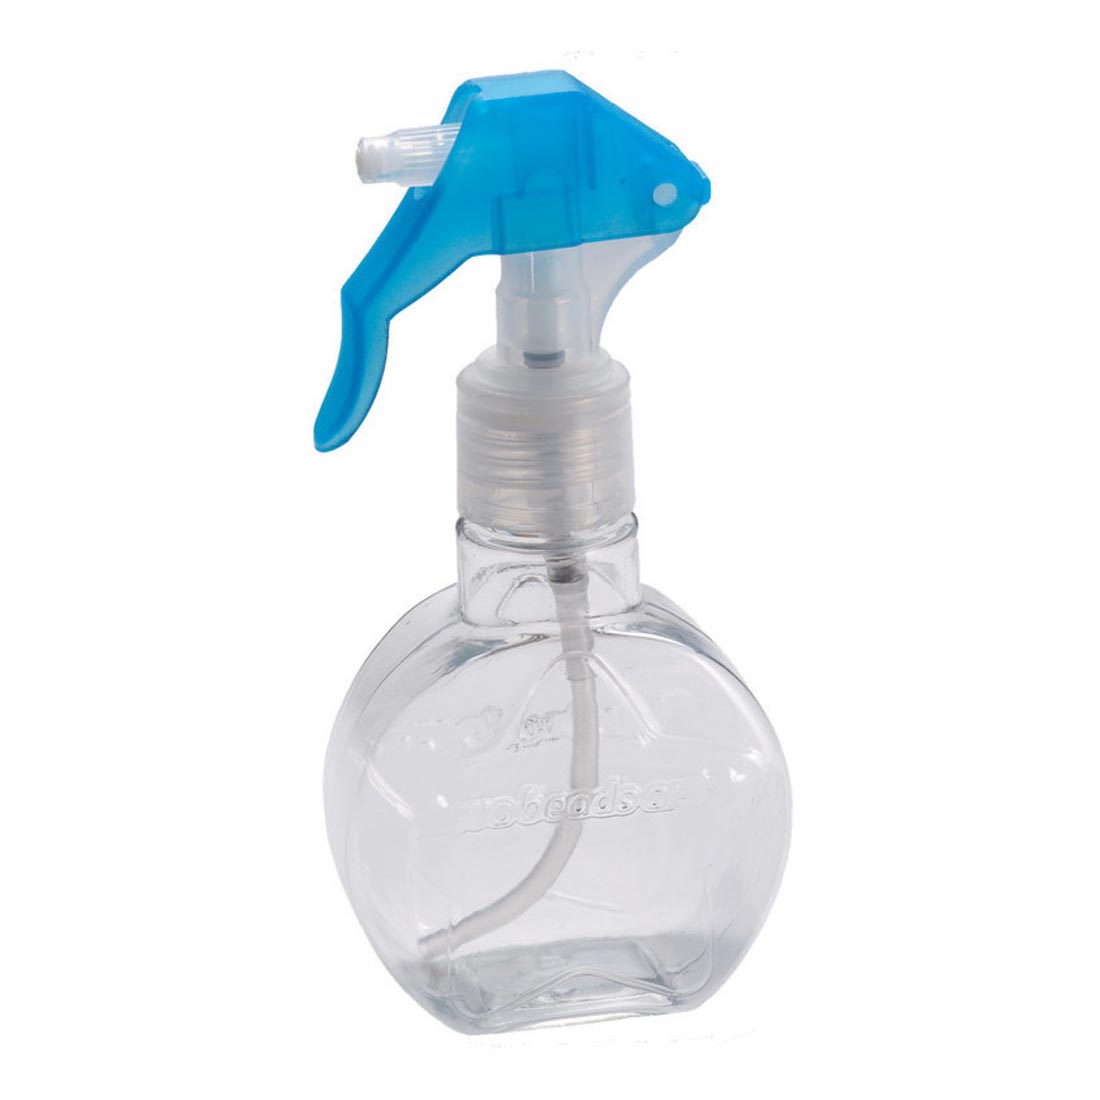 Aquabeads Water Sprayer